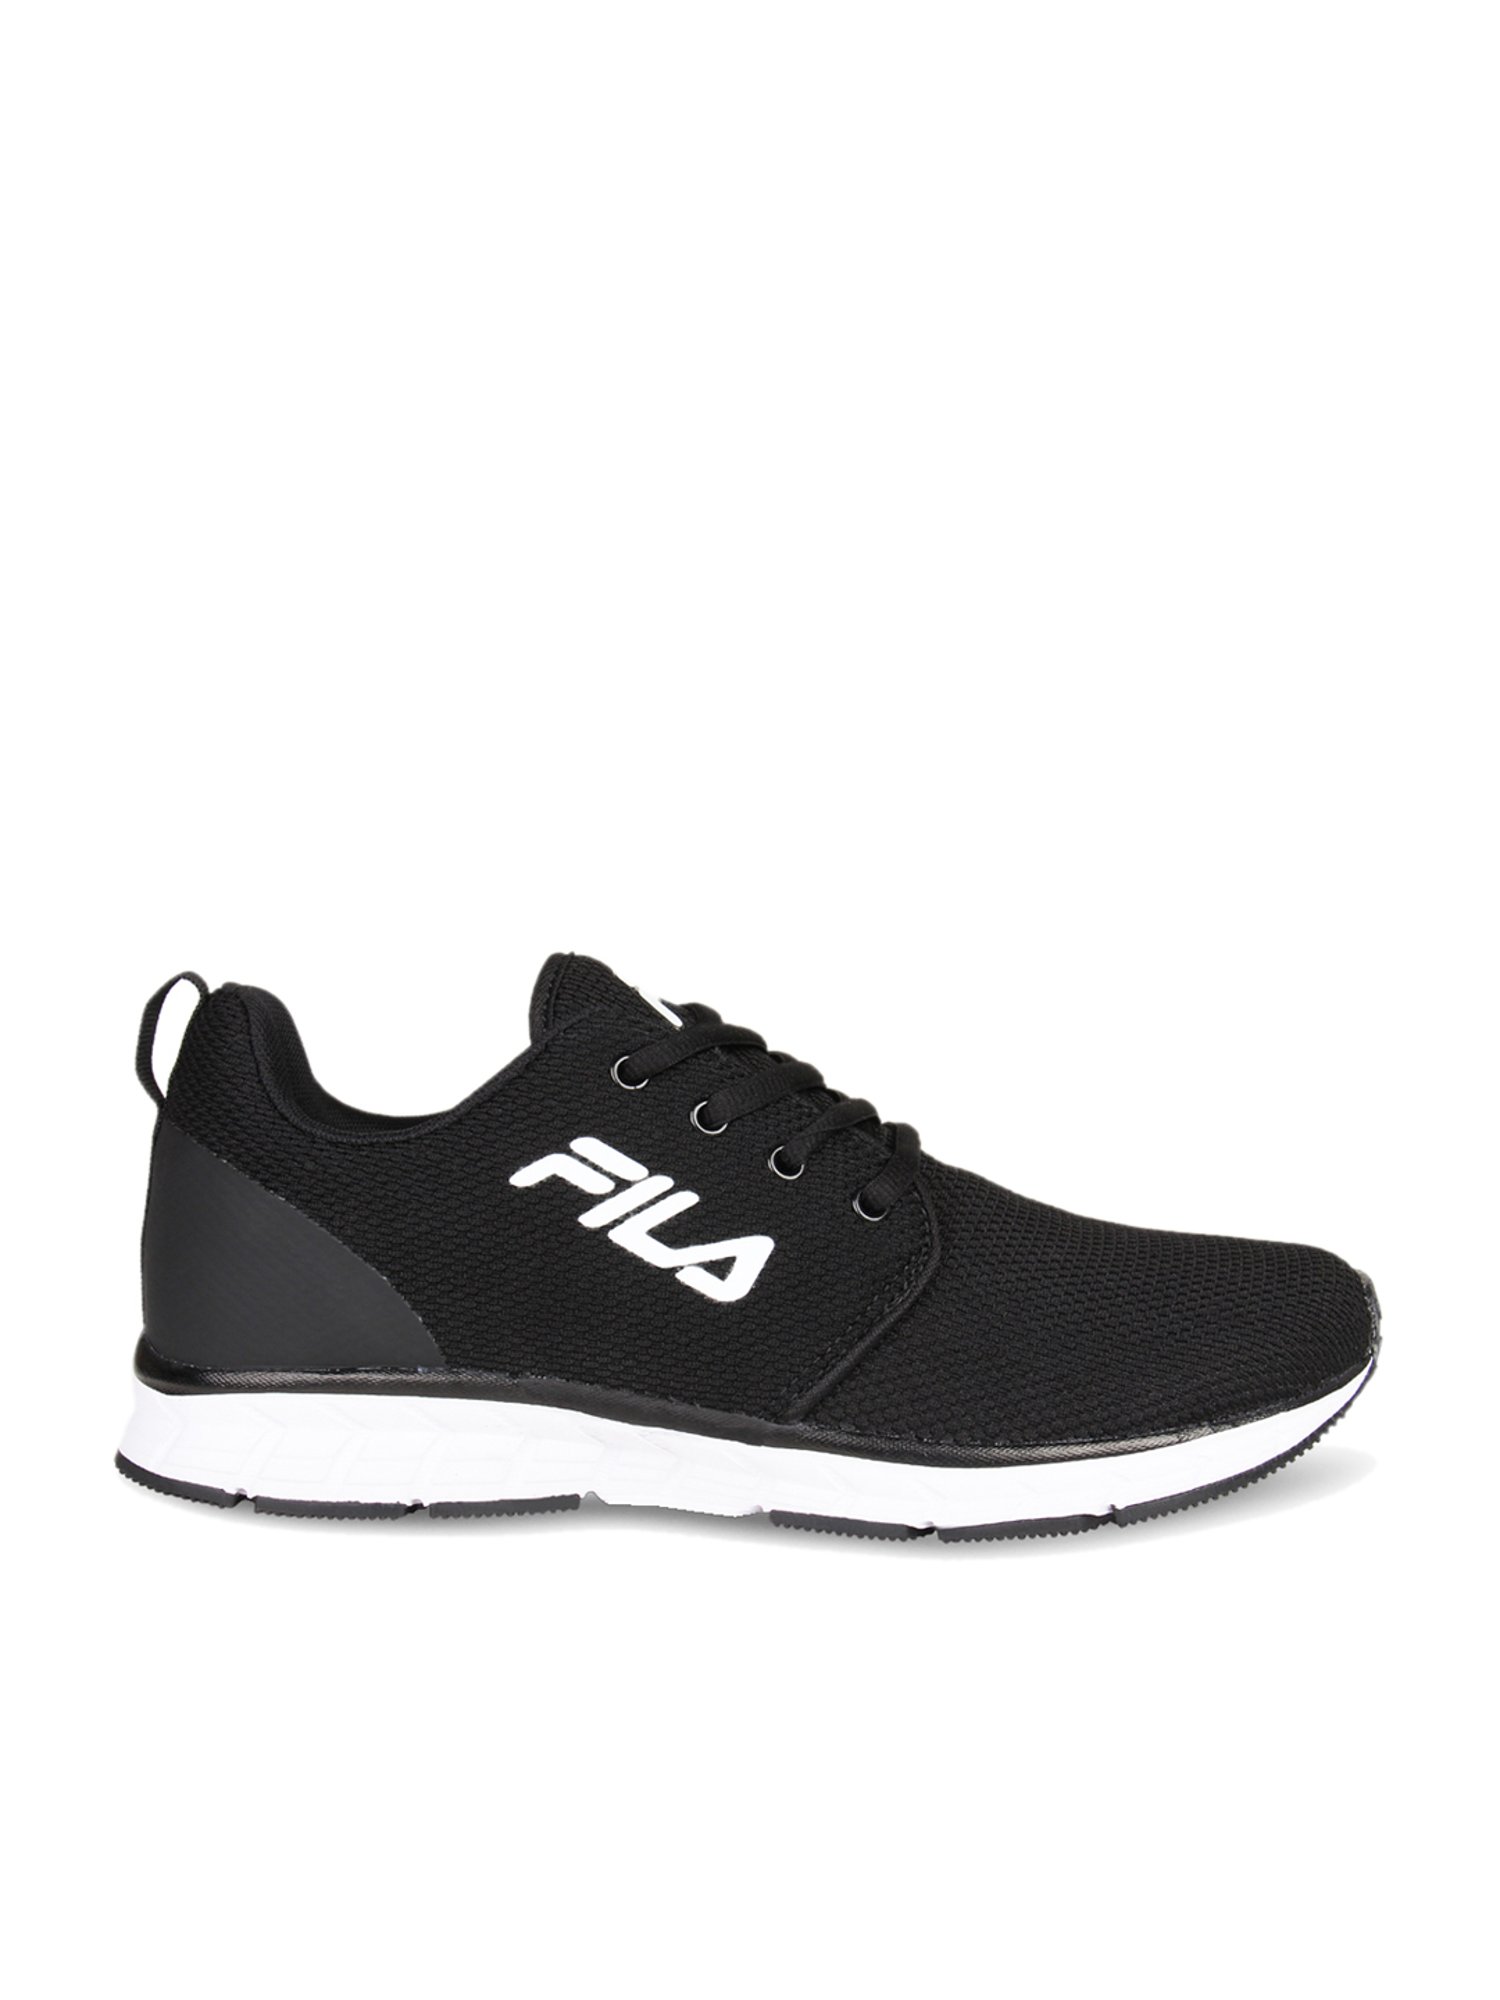 Fila Memory Workshift Slip Resistant Men's Shoes Black 1sg30002-001 -  Walmart.com